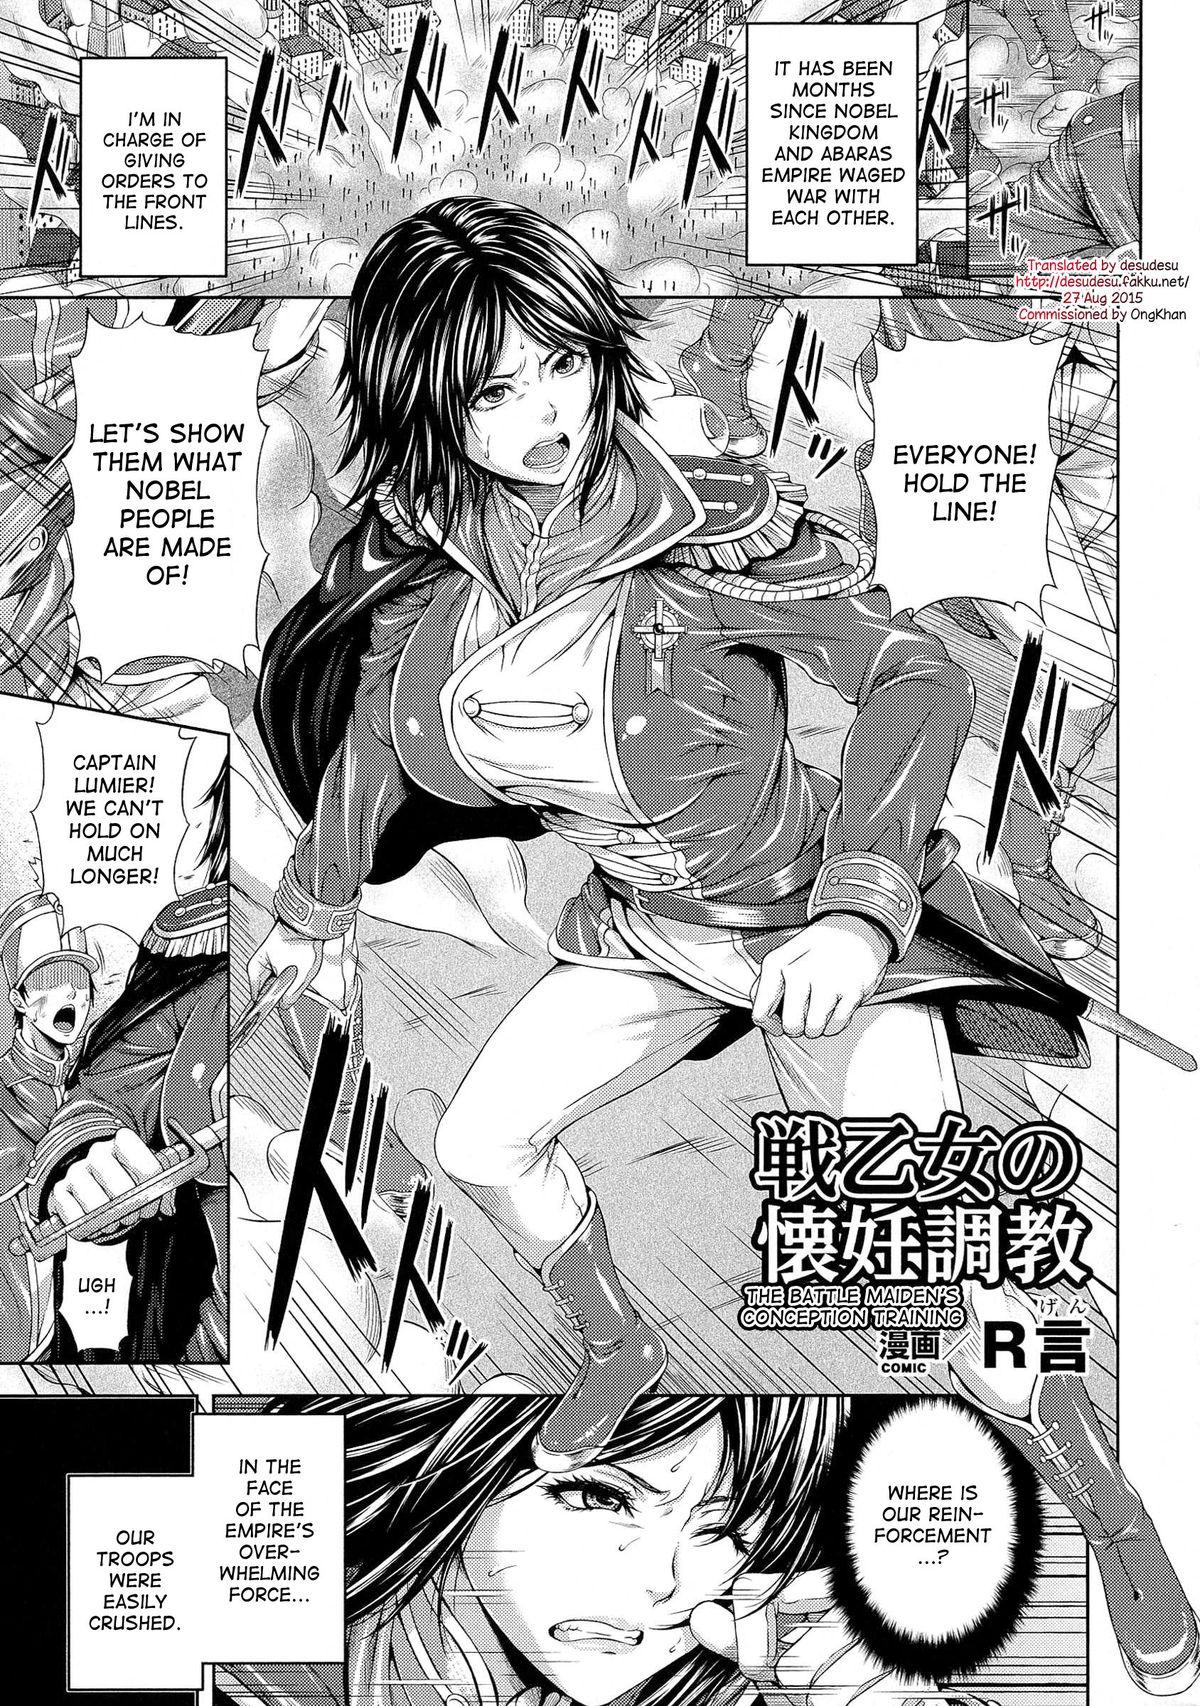 Jacking Off Ikusaotome no Kainin Choukyou | The Battle Maiden's Conception Training Bunda Grande - Page 5